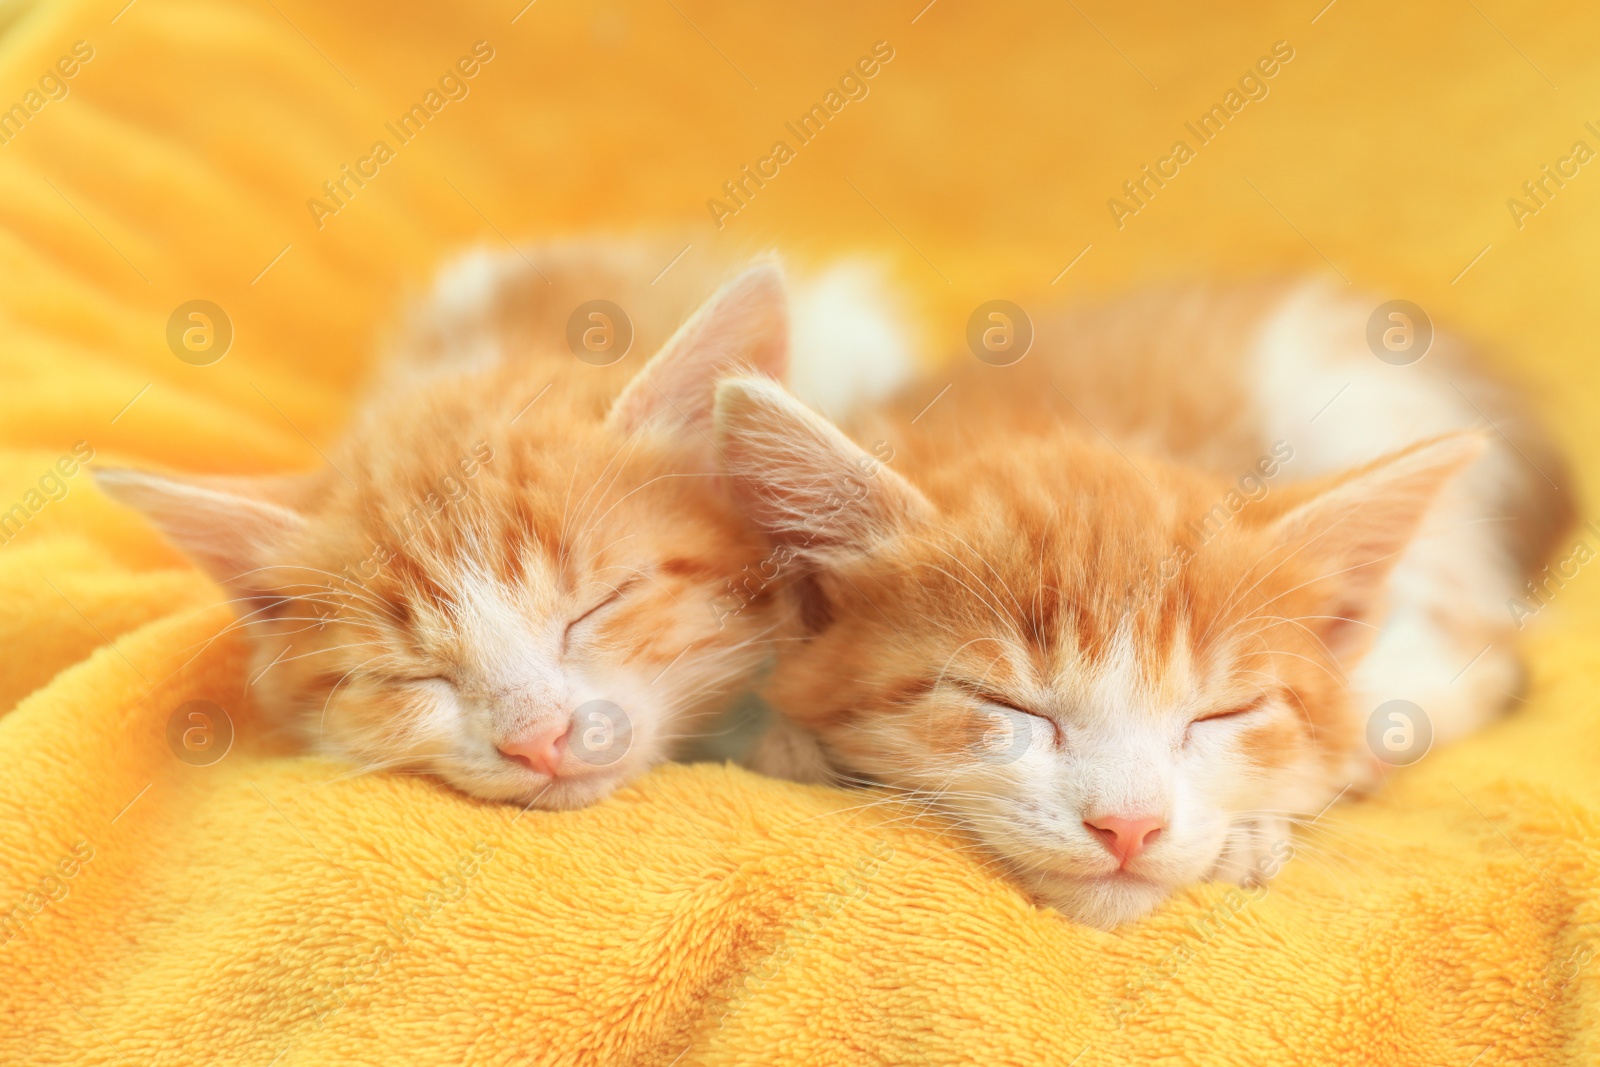 Photo of Cute little kittens sleeping on yellow blanket